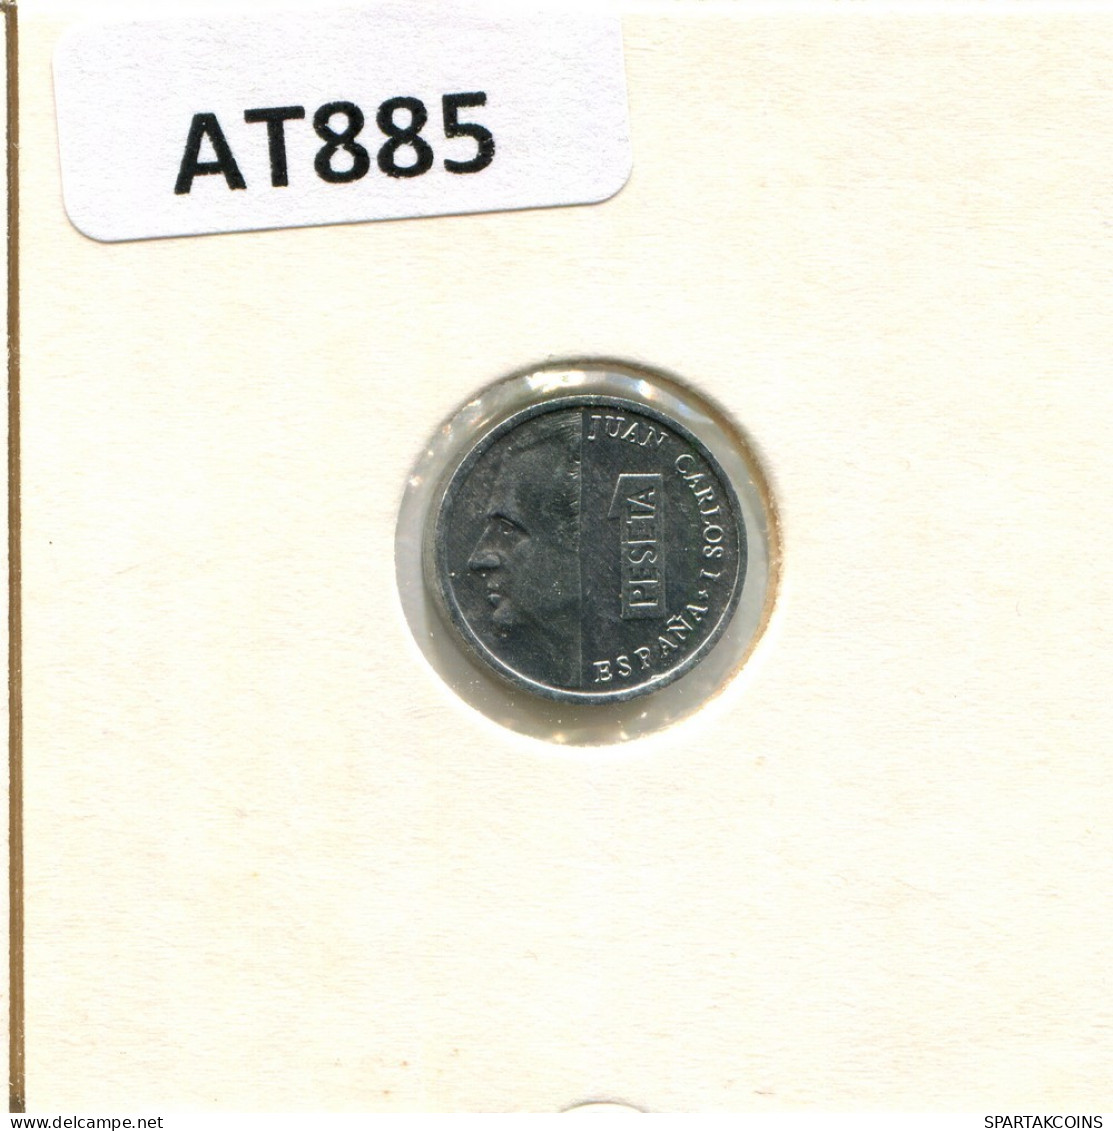 1 PESETA 1999 ESPAÑA Moneda SPAIN #AT885.E.A - 1 Peseta